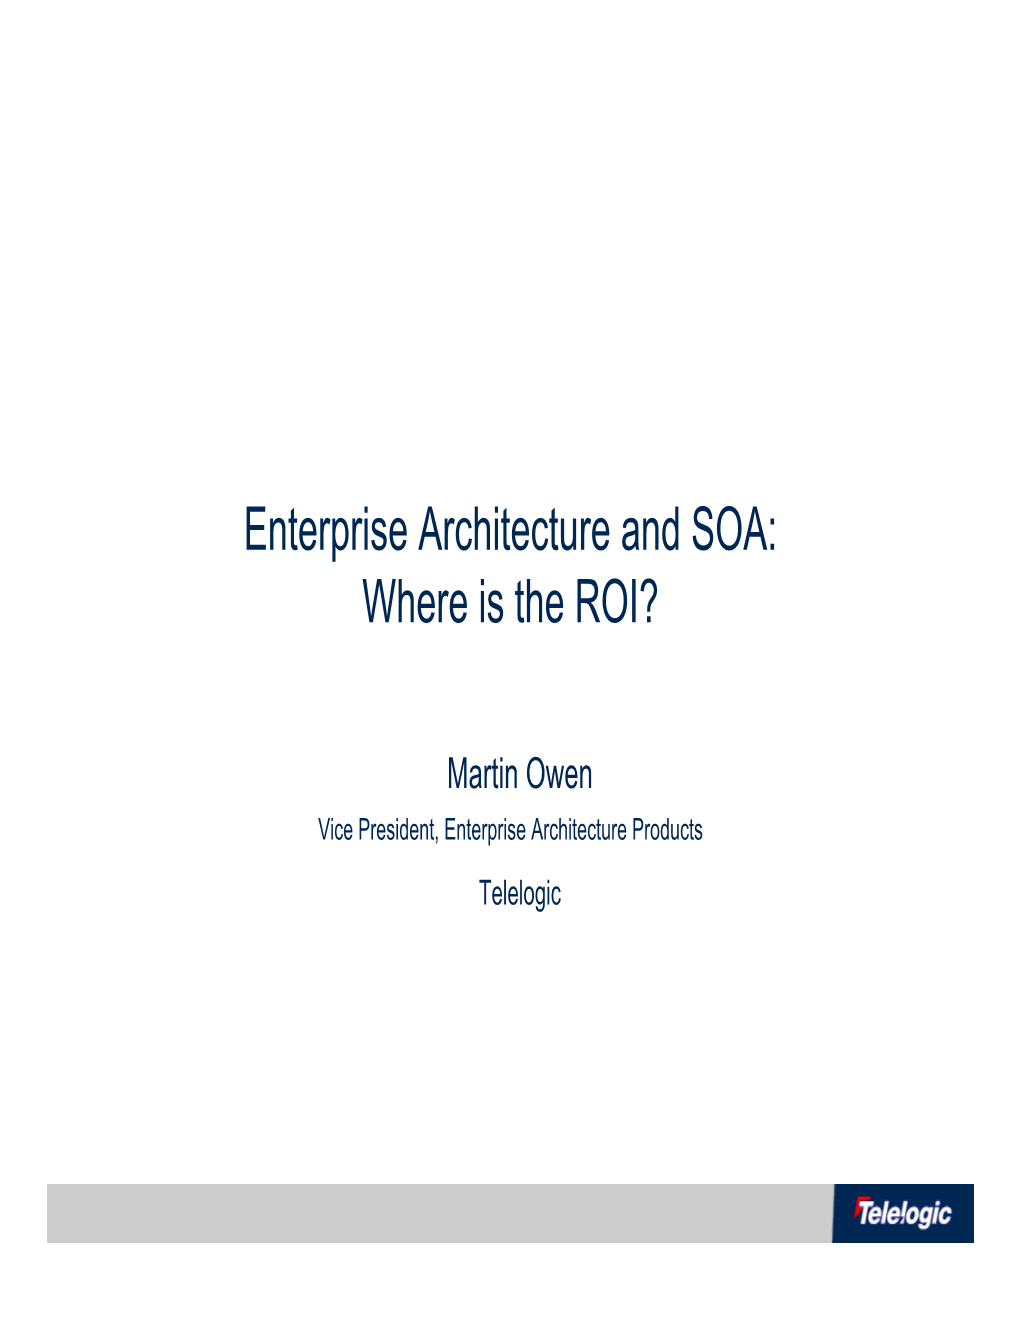 Enterprise Architecture and SOA: Where Is the ROI?